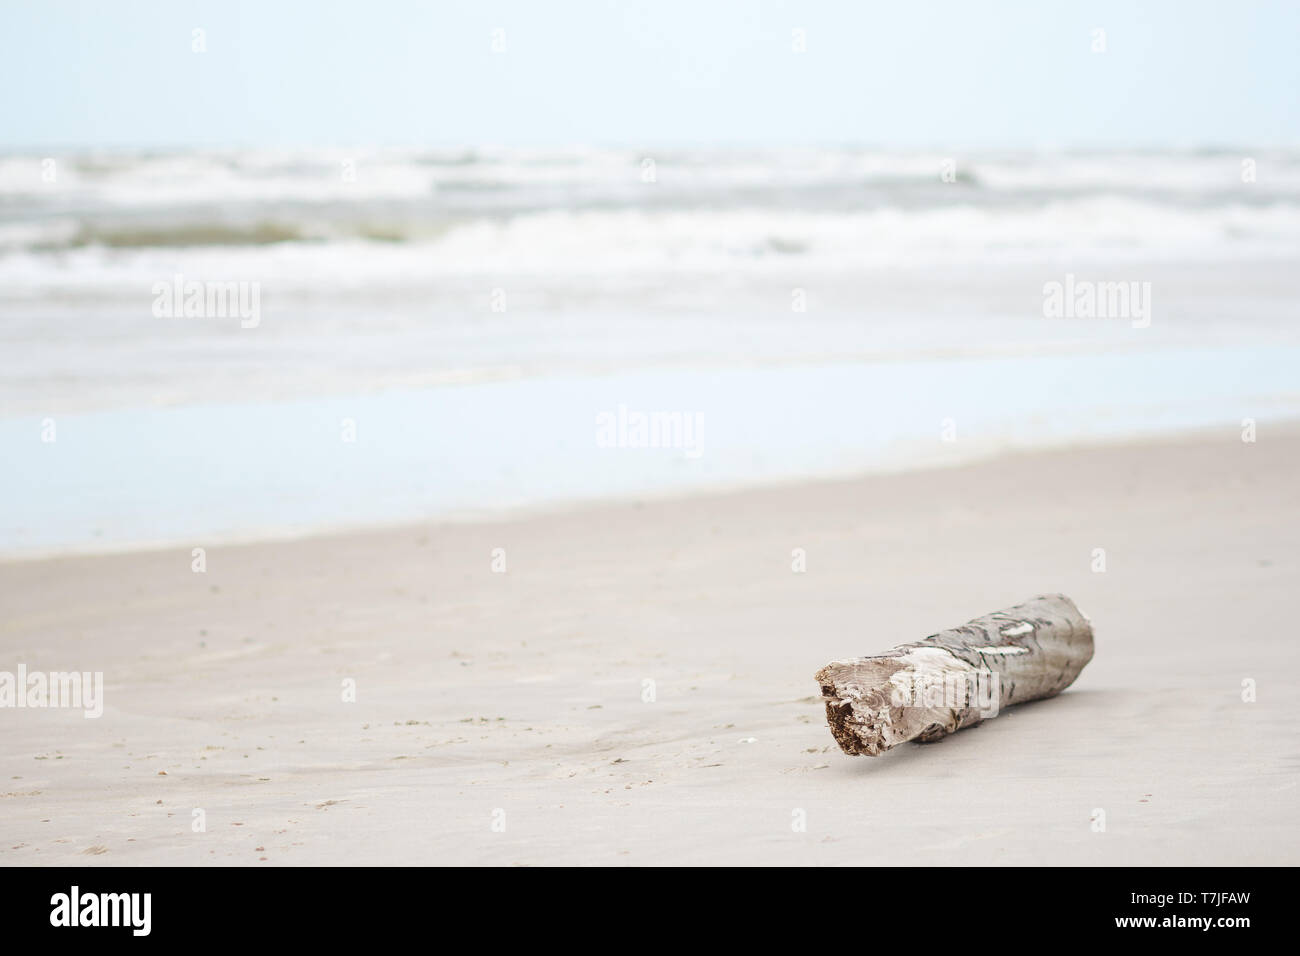 Treibholz Strandgut am Strand Sand Nordsee Dänemark / driftwood stranded good on beach sand north sea denmark Stock Photo